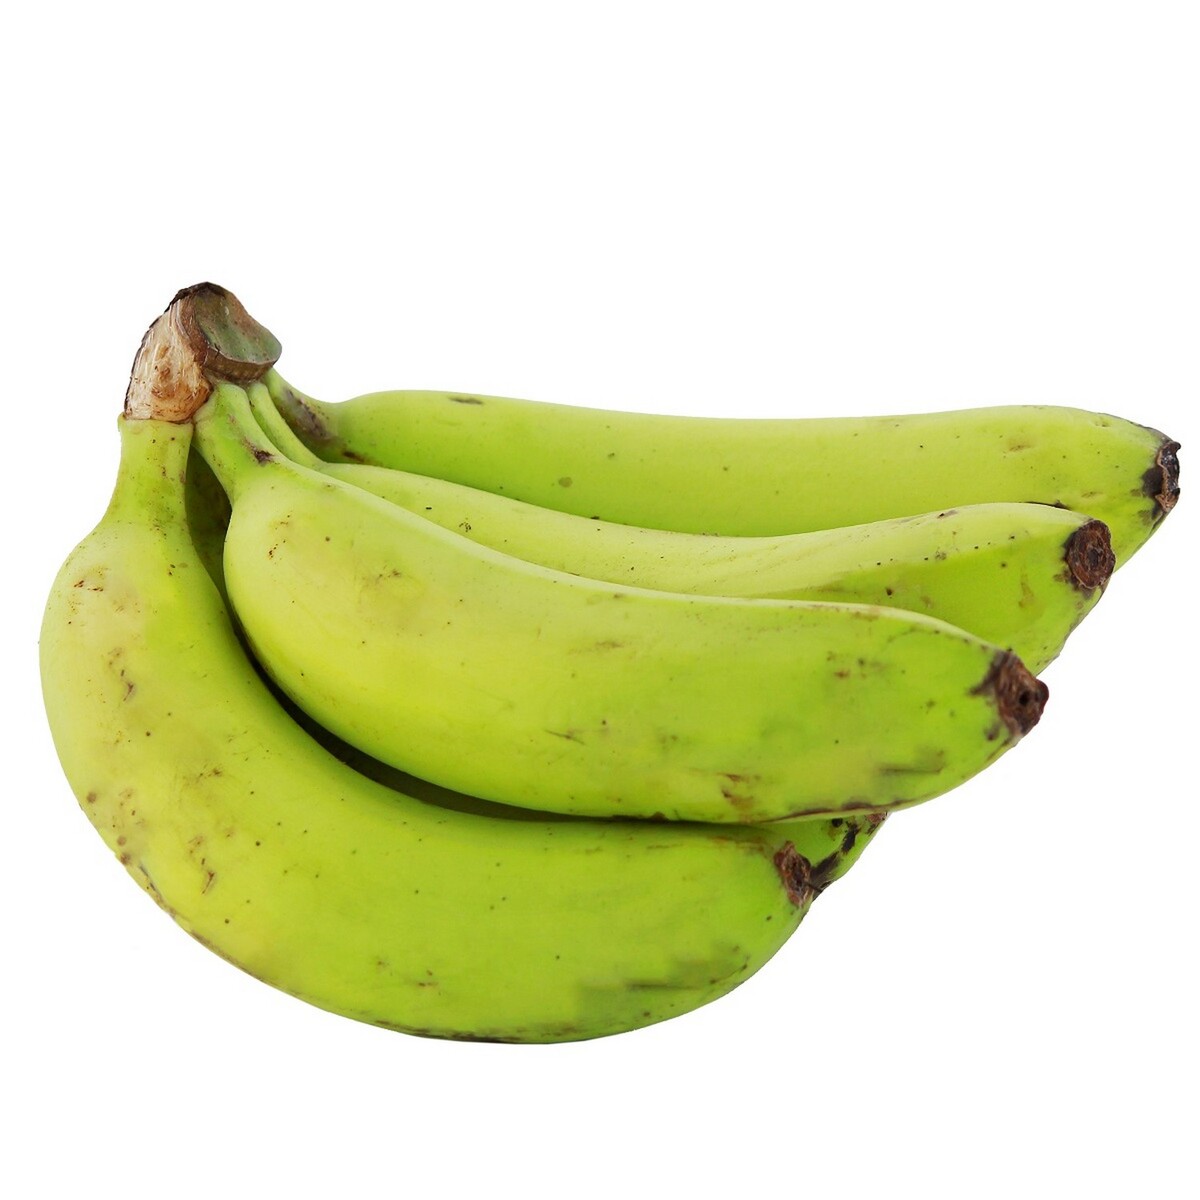 Banana Robusta Green  approx. 450gm-500gm